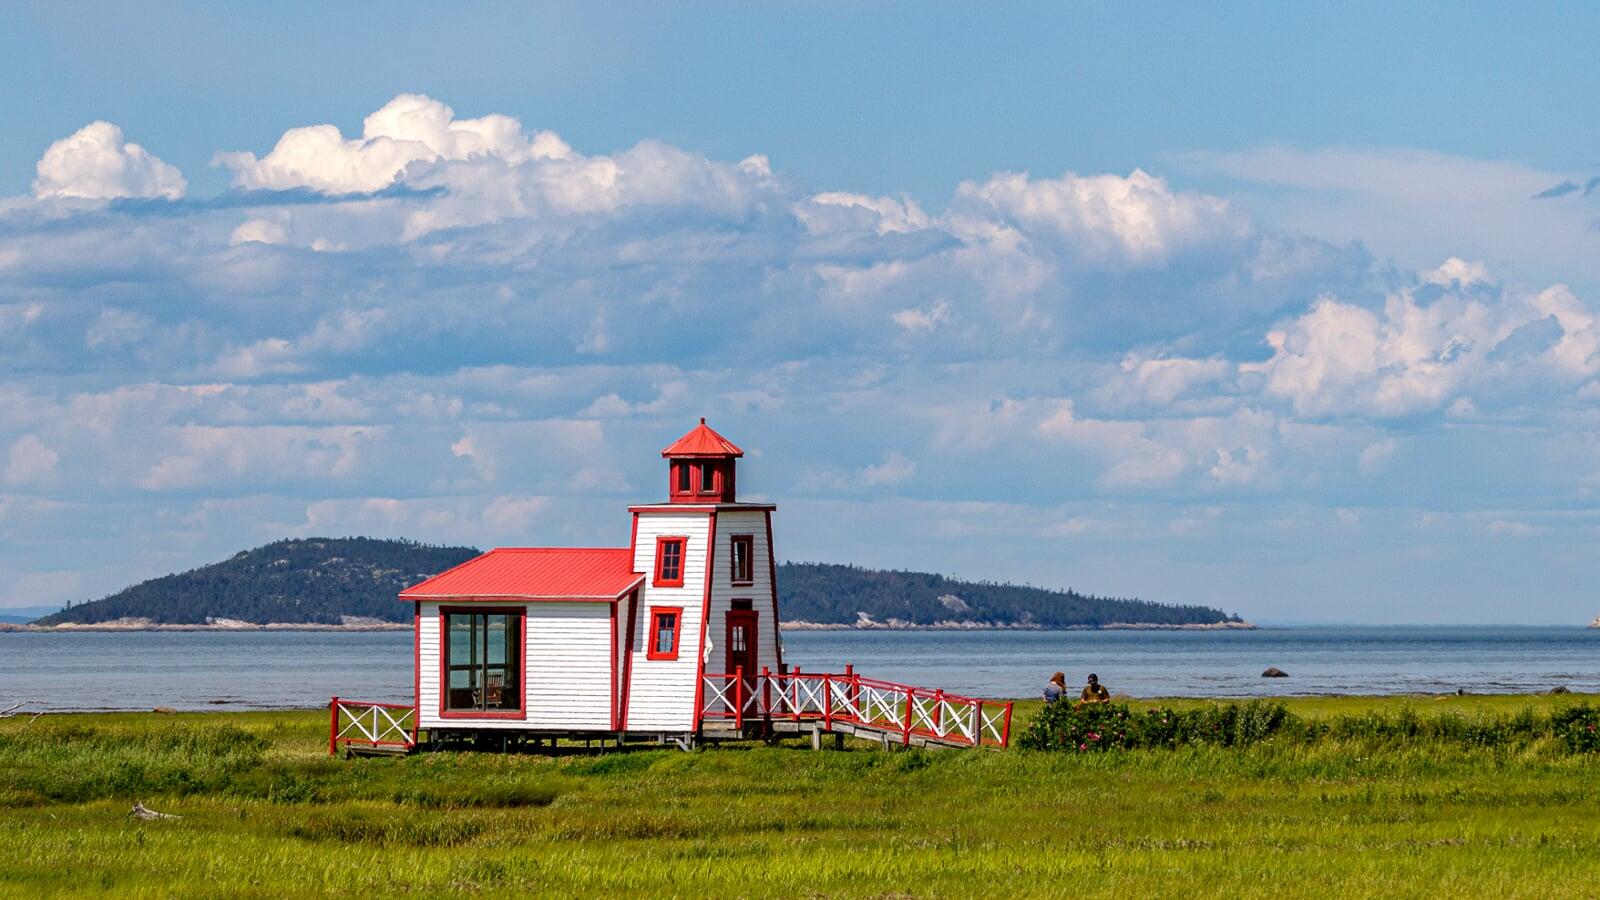 Petit Phare - Small Lighthouse of St Andre de Kamouraska, Quebec, Canada